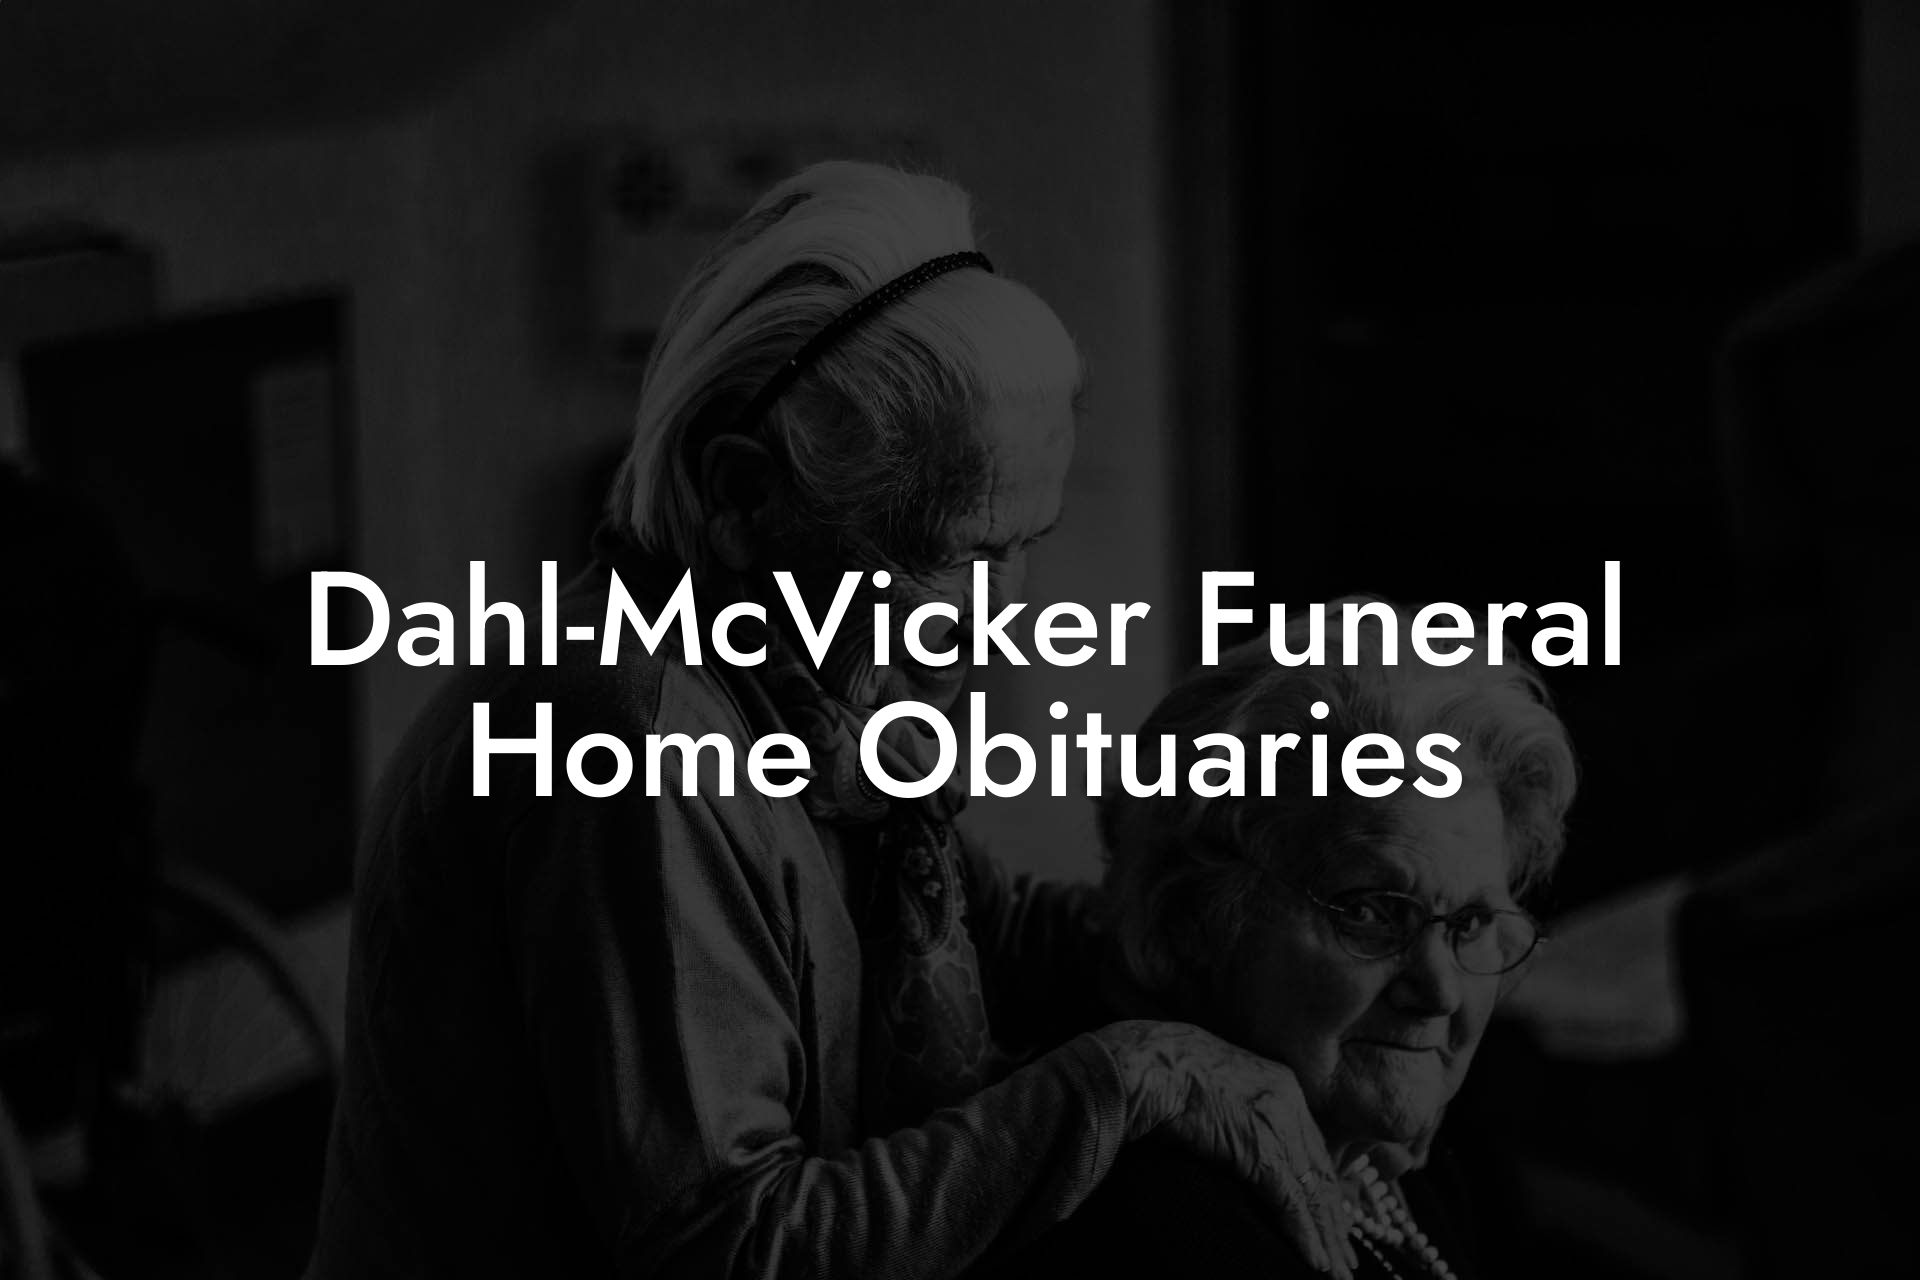 Dahl-McVicker Funeral Home Obituaries